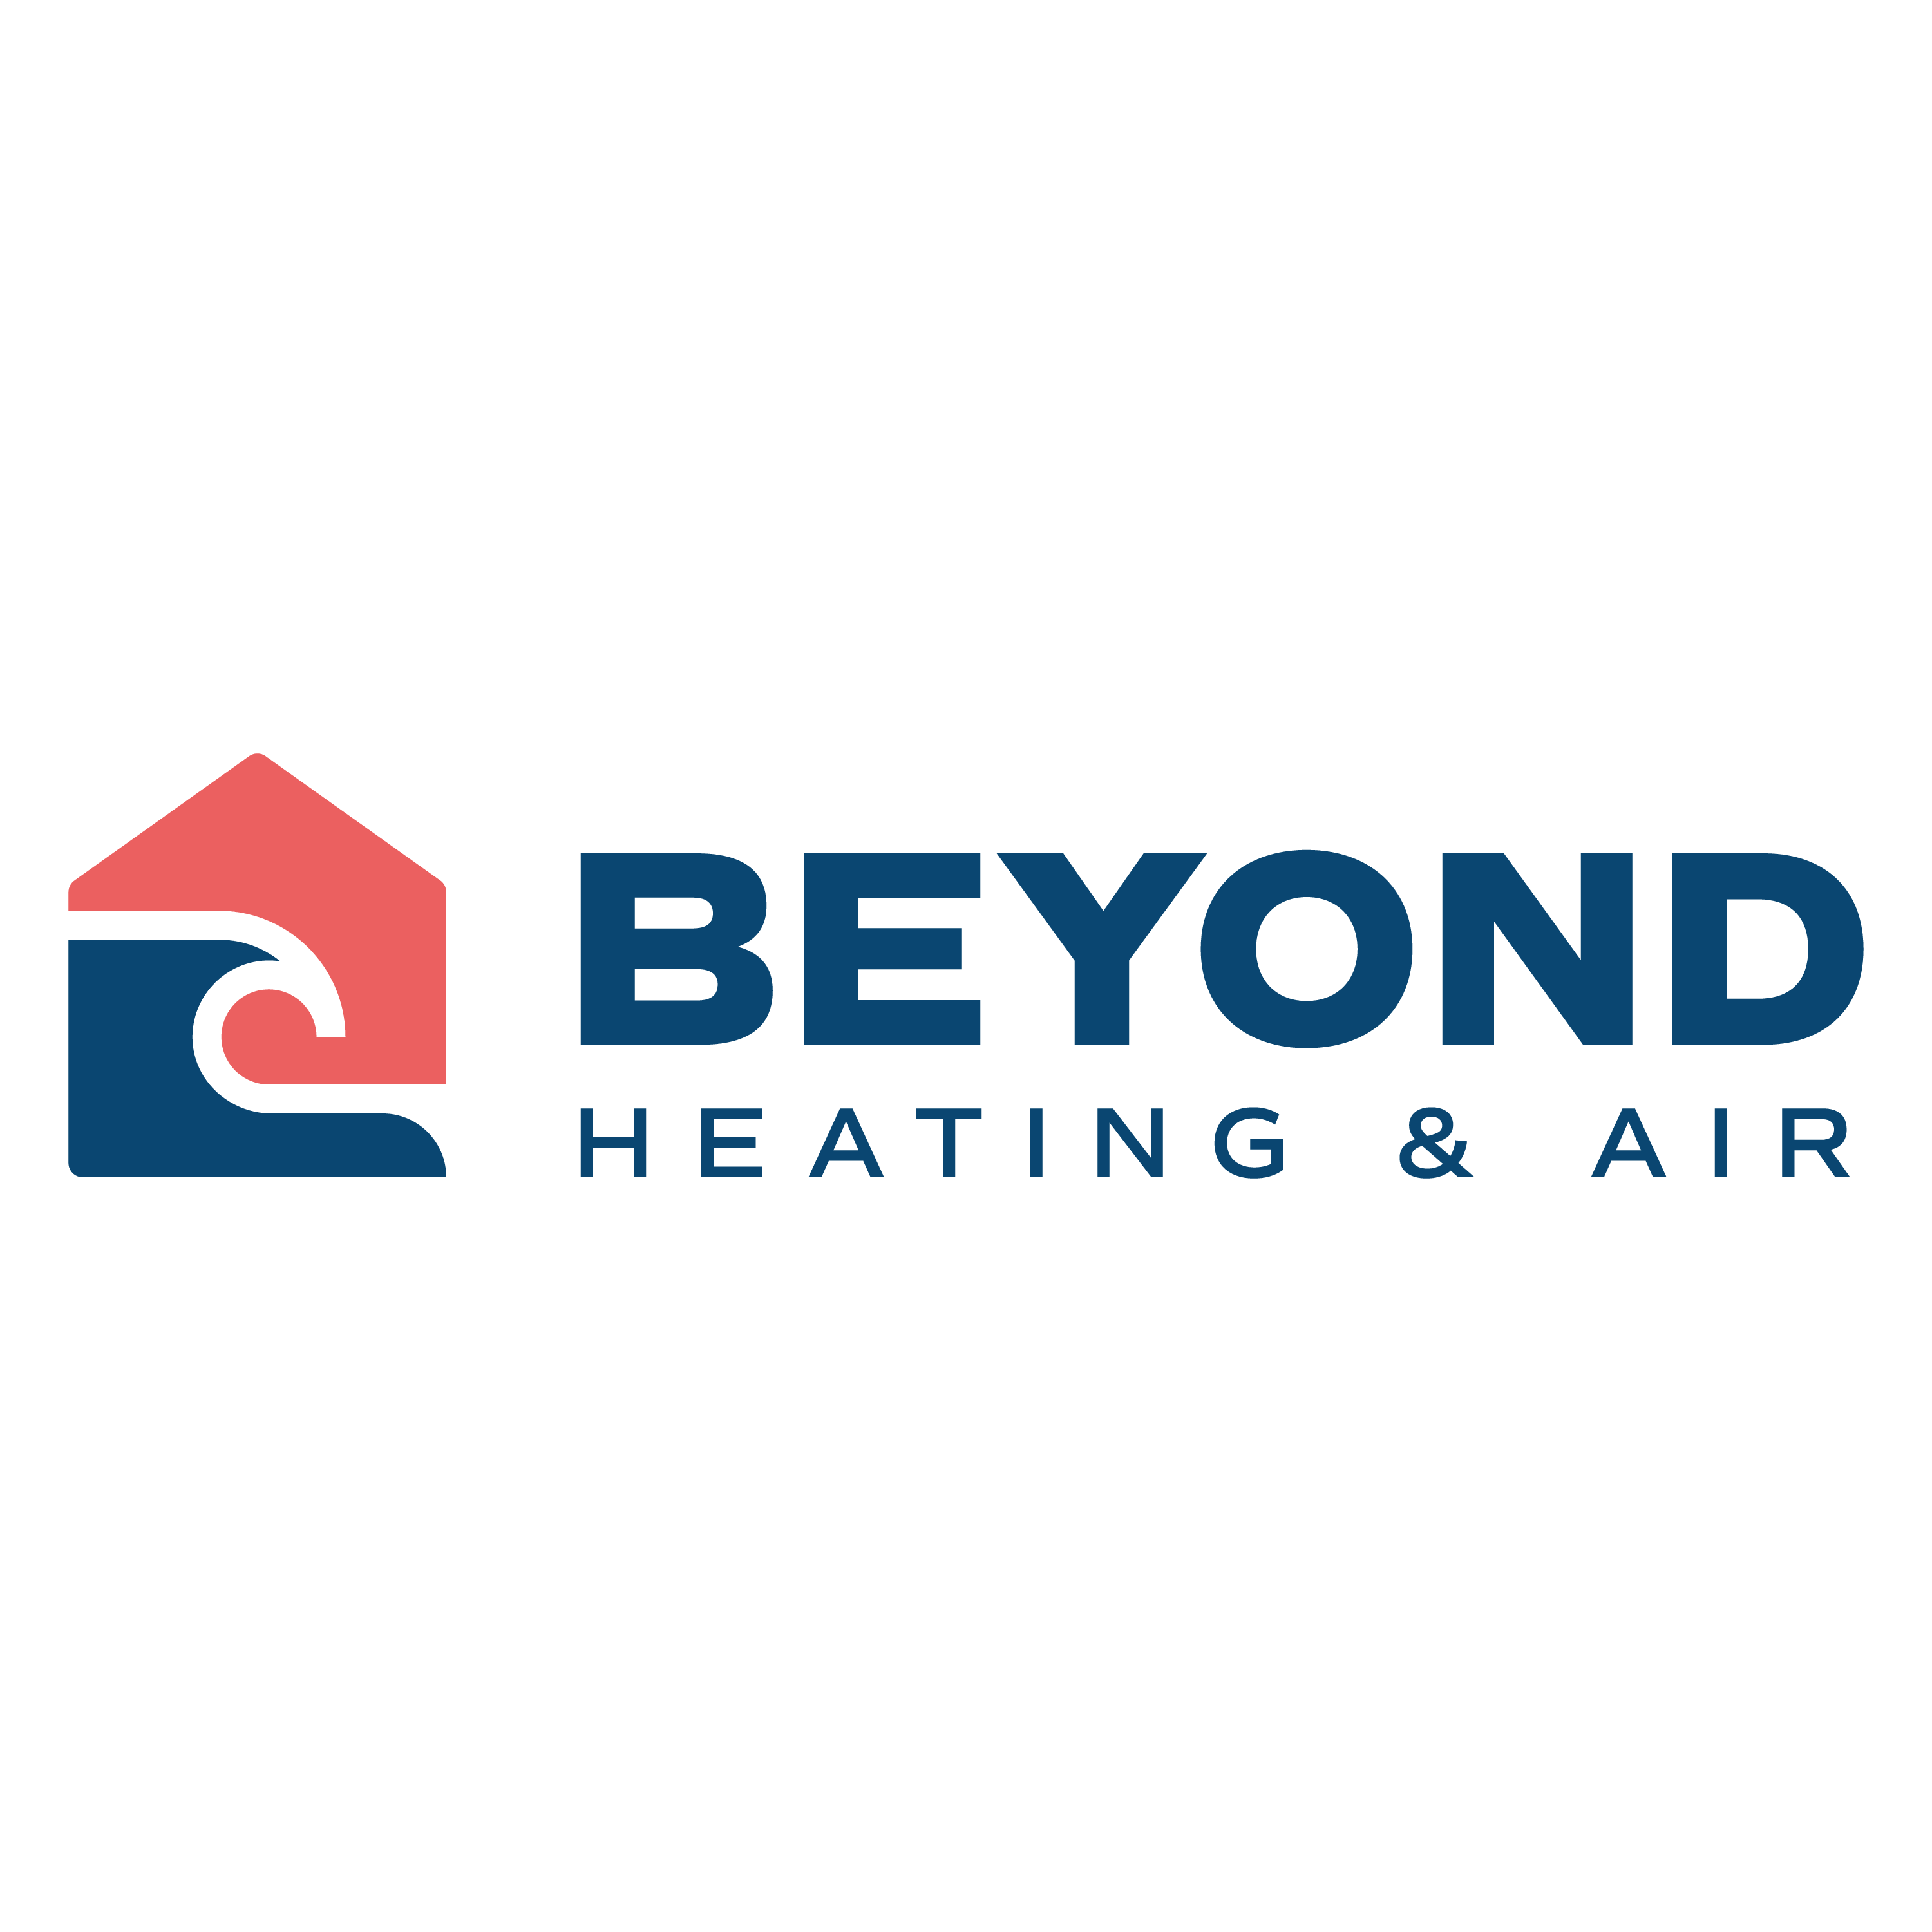 Beyond Heating & Air - Santa Barbara, CA 93117 - (805)966-4321 | ShowMeLocal.com